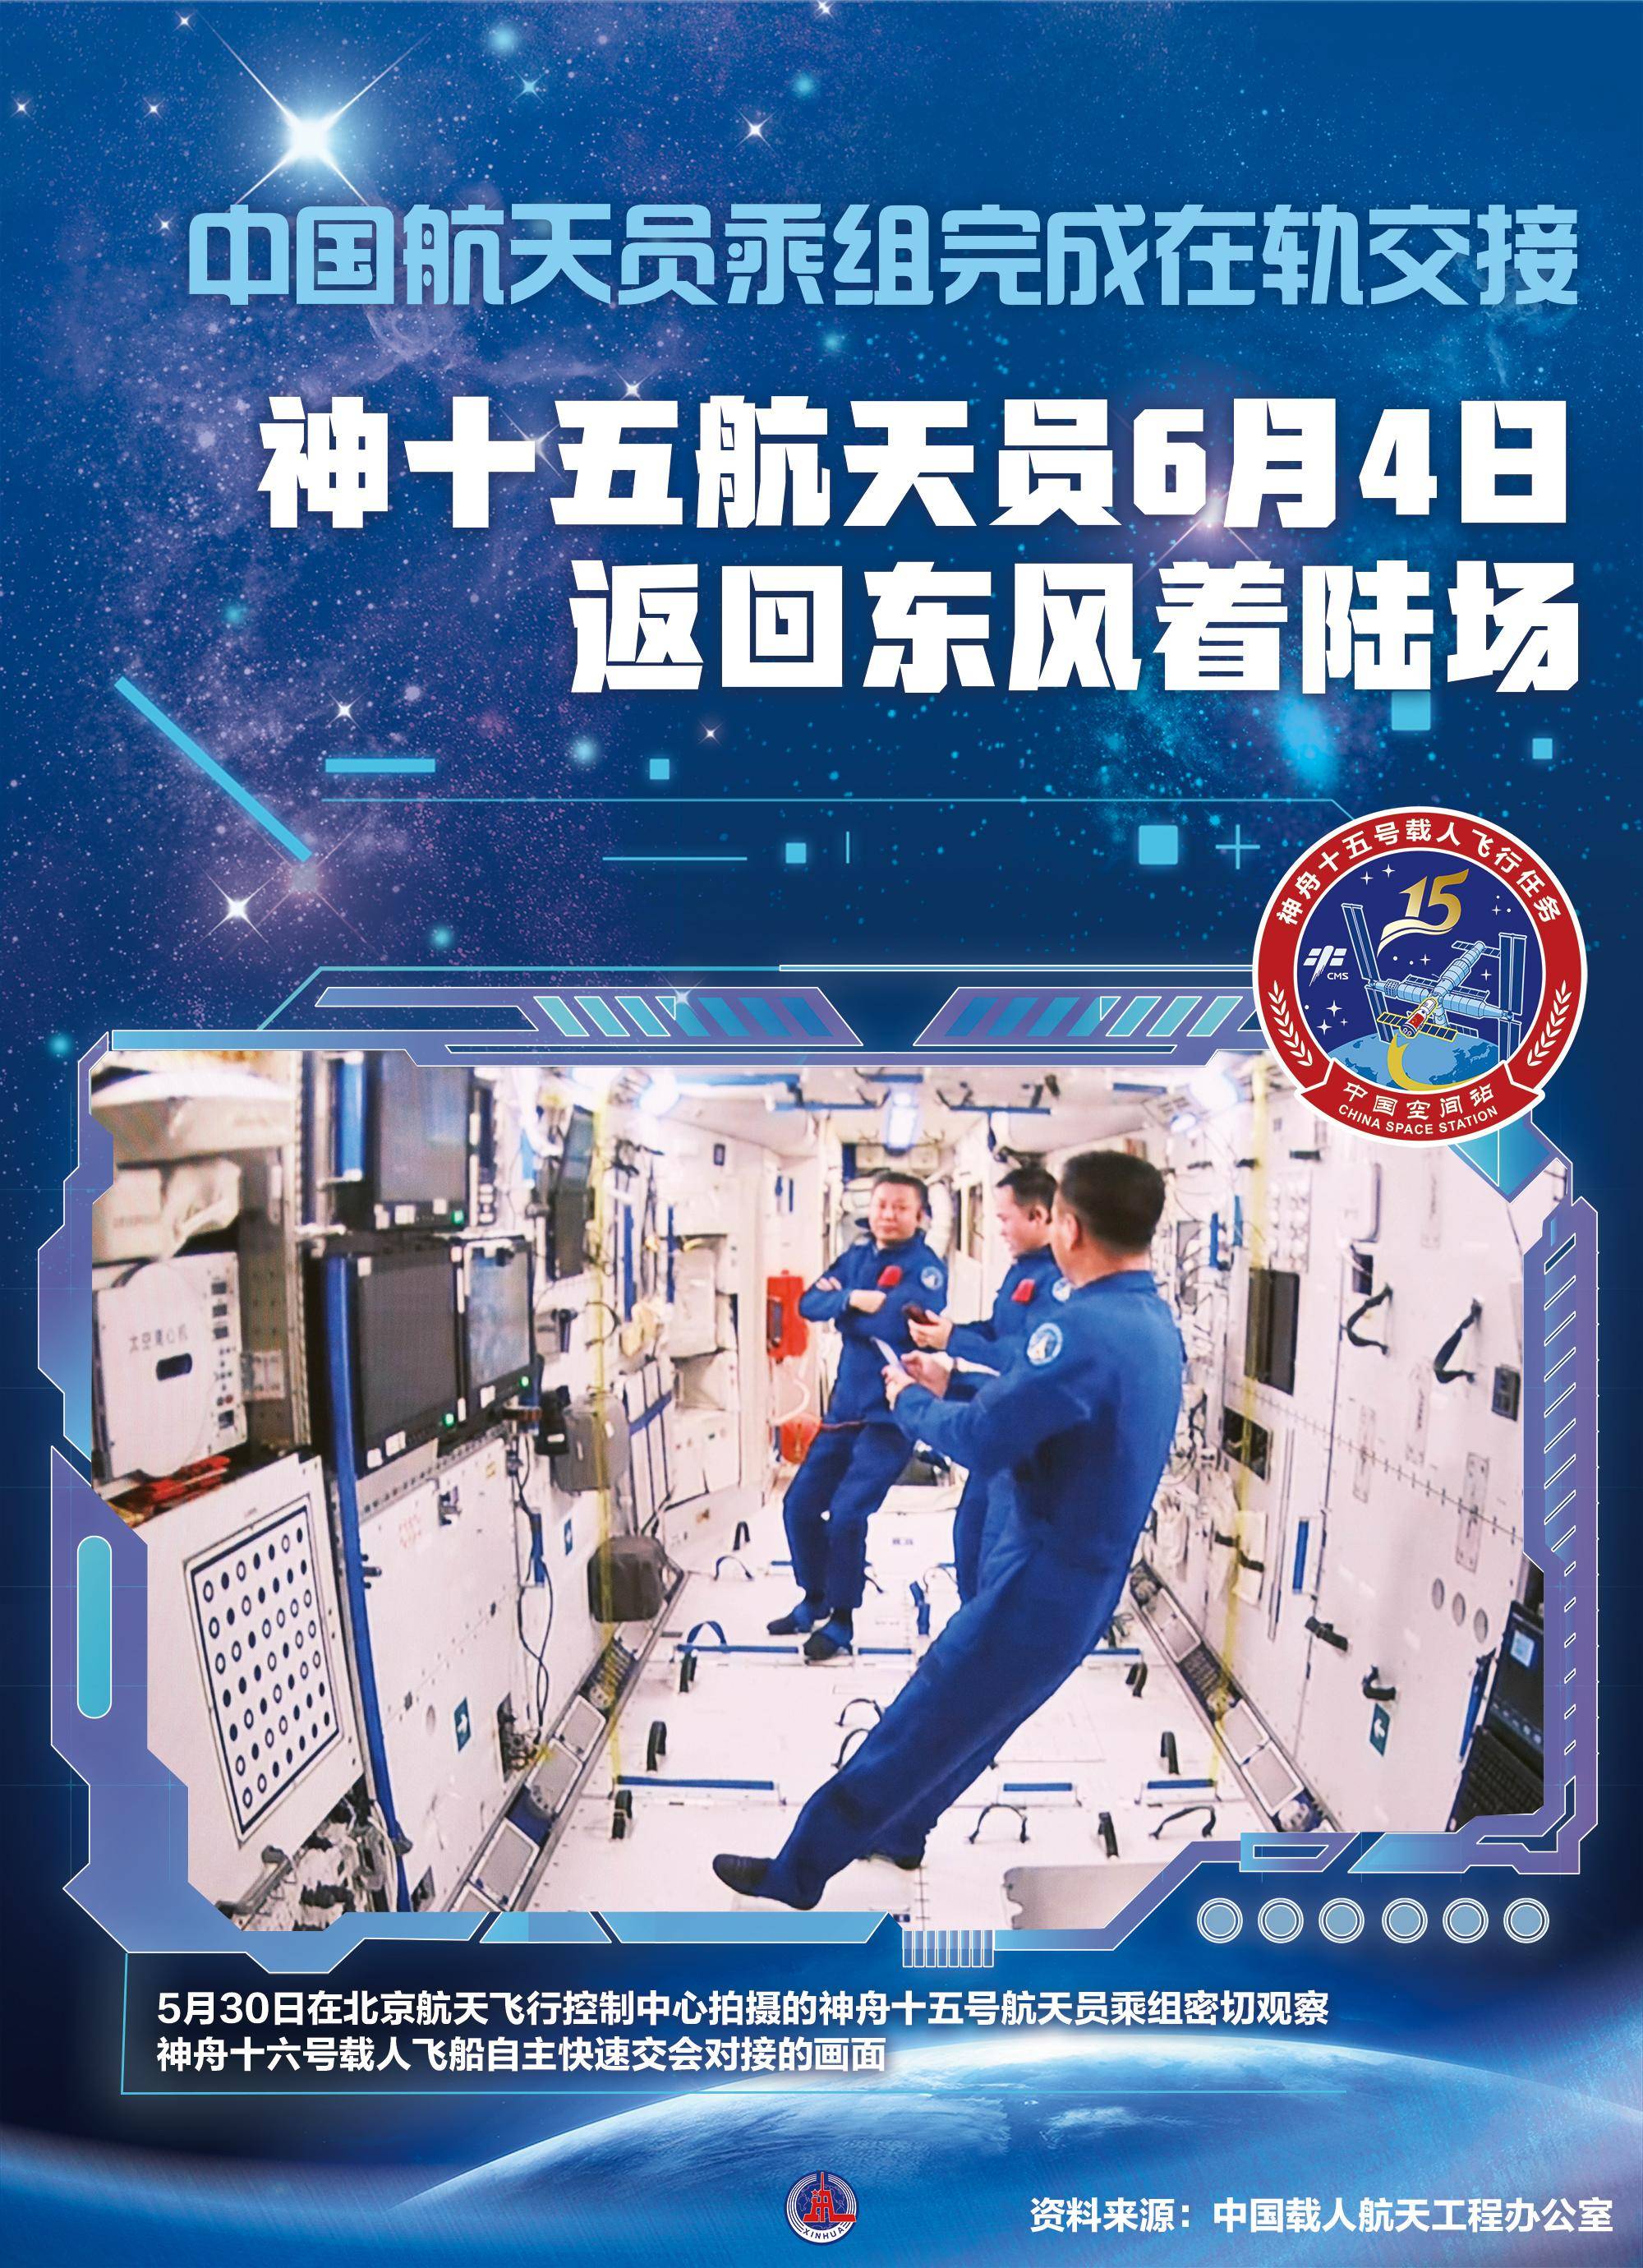 GNEWS - 神舟十五号太空人进入天和核心舱 实现中国航天史上首次太空人在轨轮换